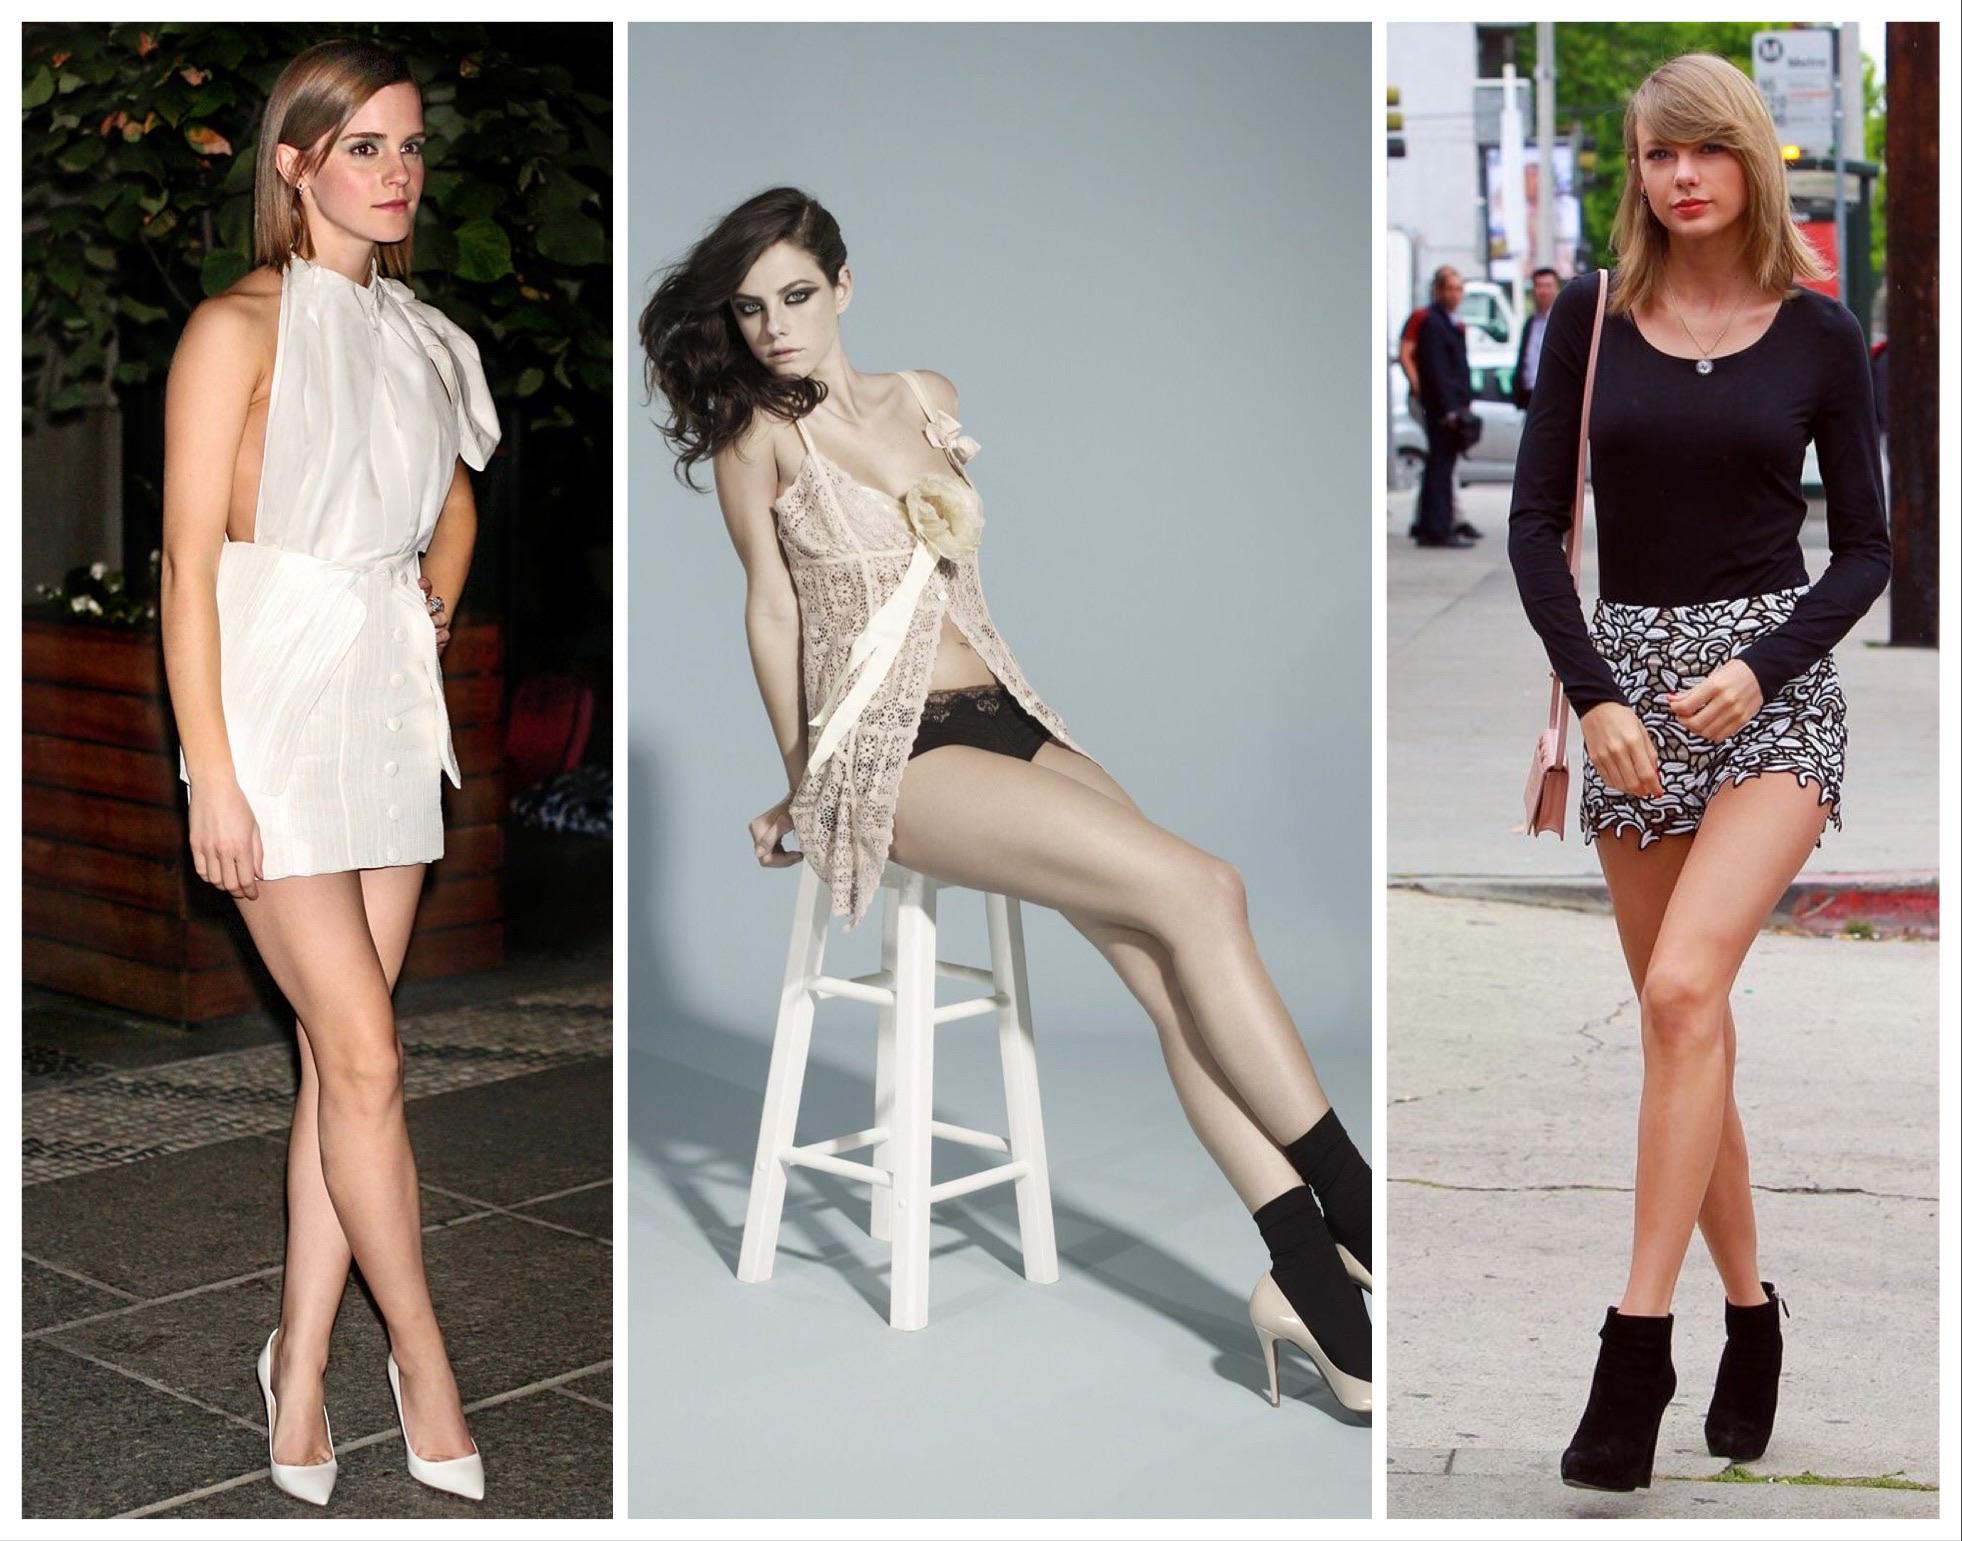 Body taylor swift nude Taylor Swift